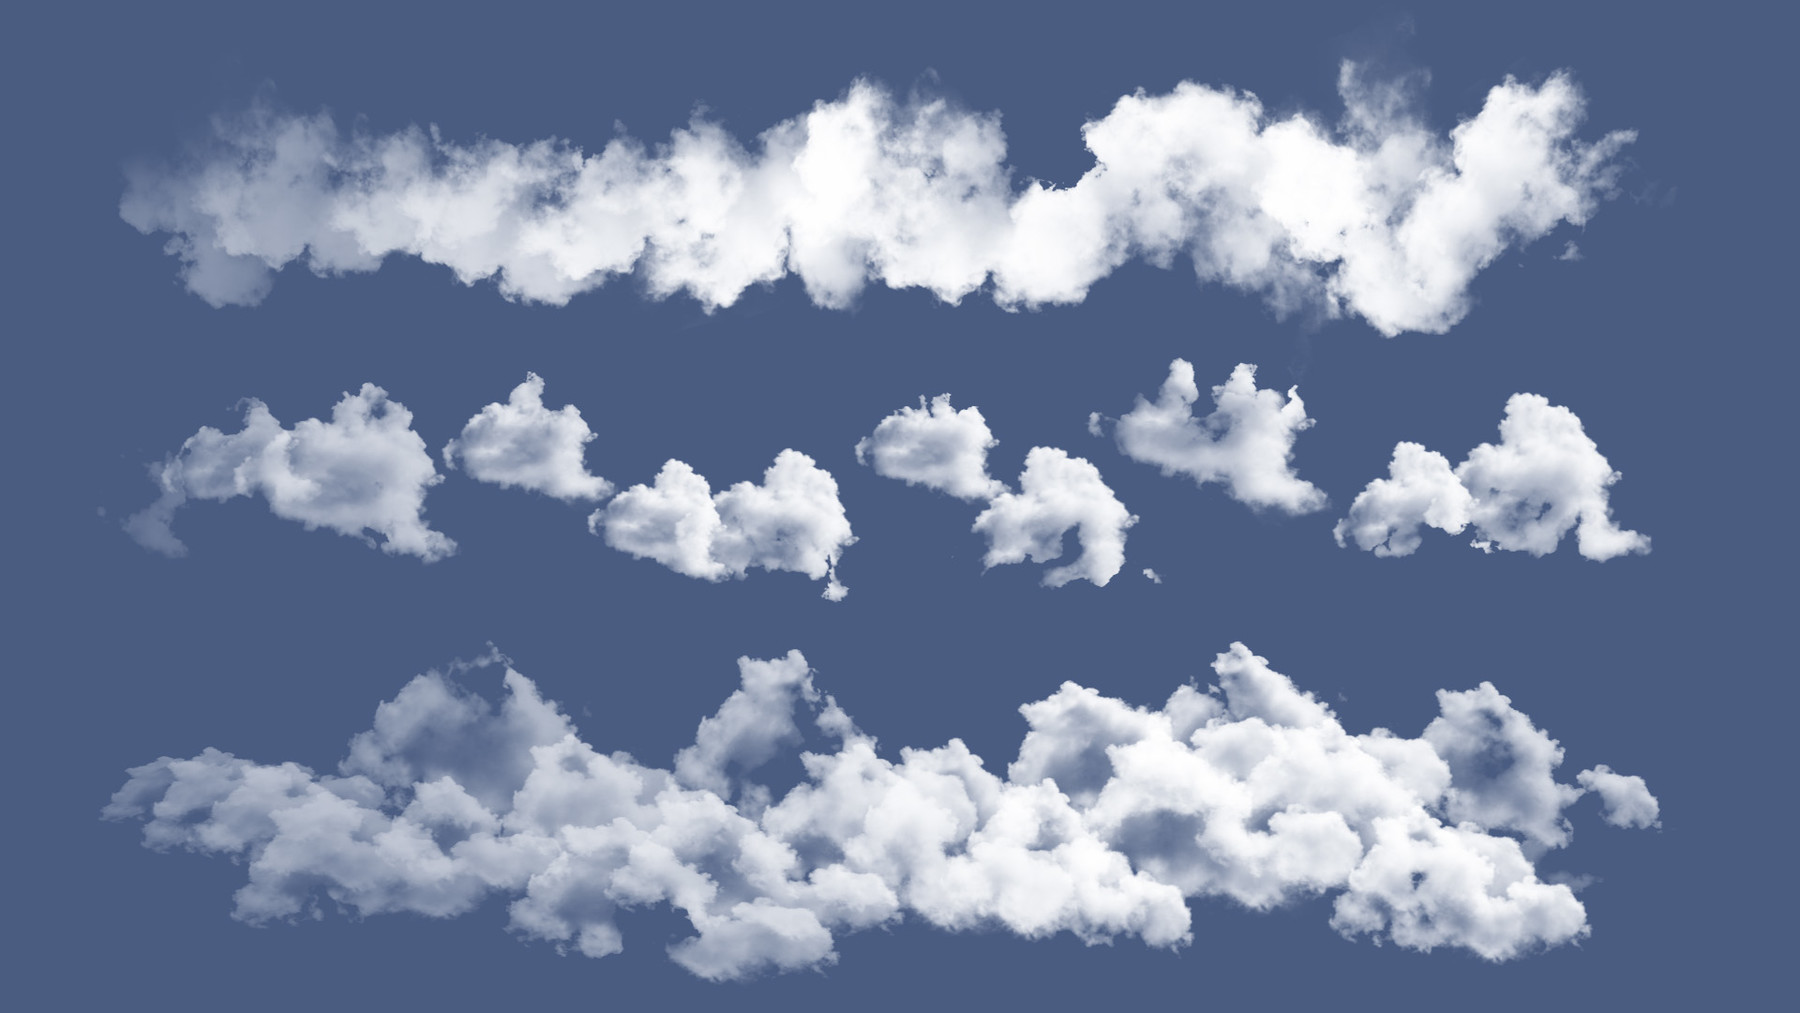 illustrator cloud